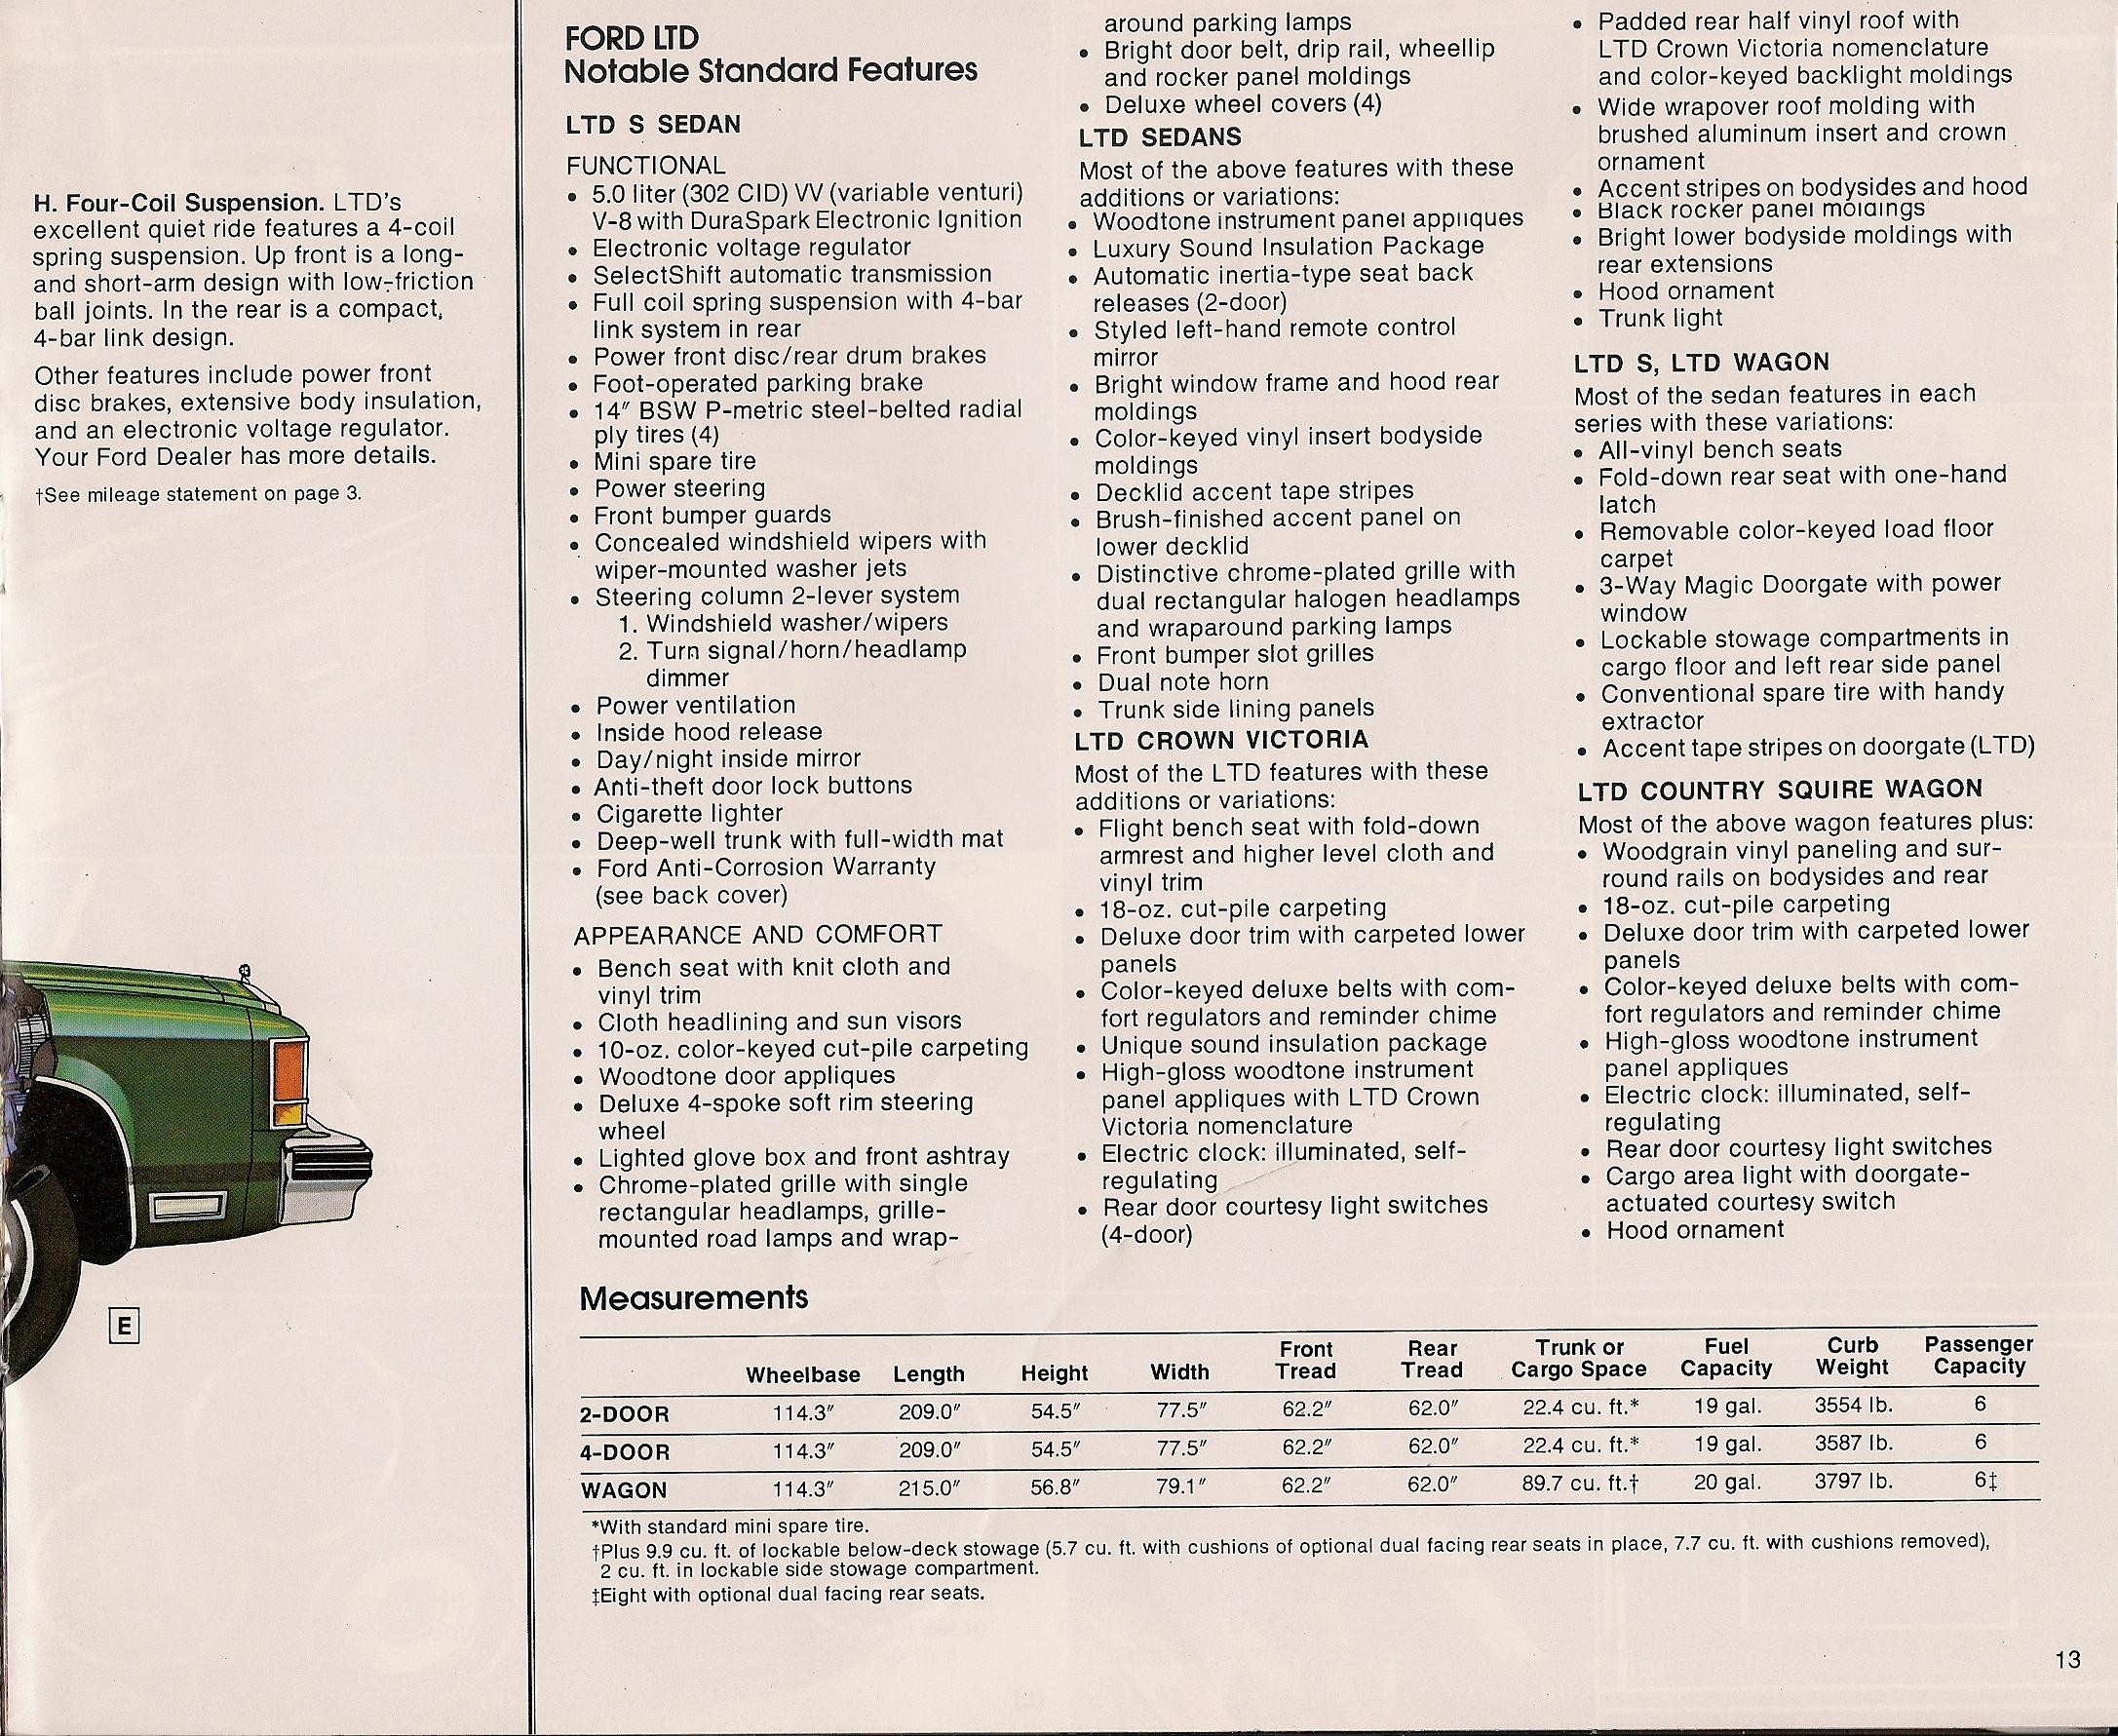 1980 Ford LTD Brochure Page 11